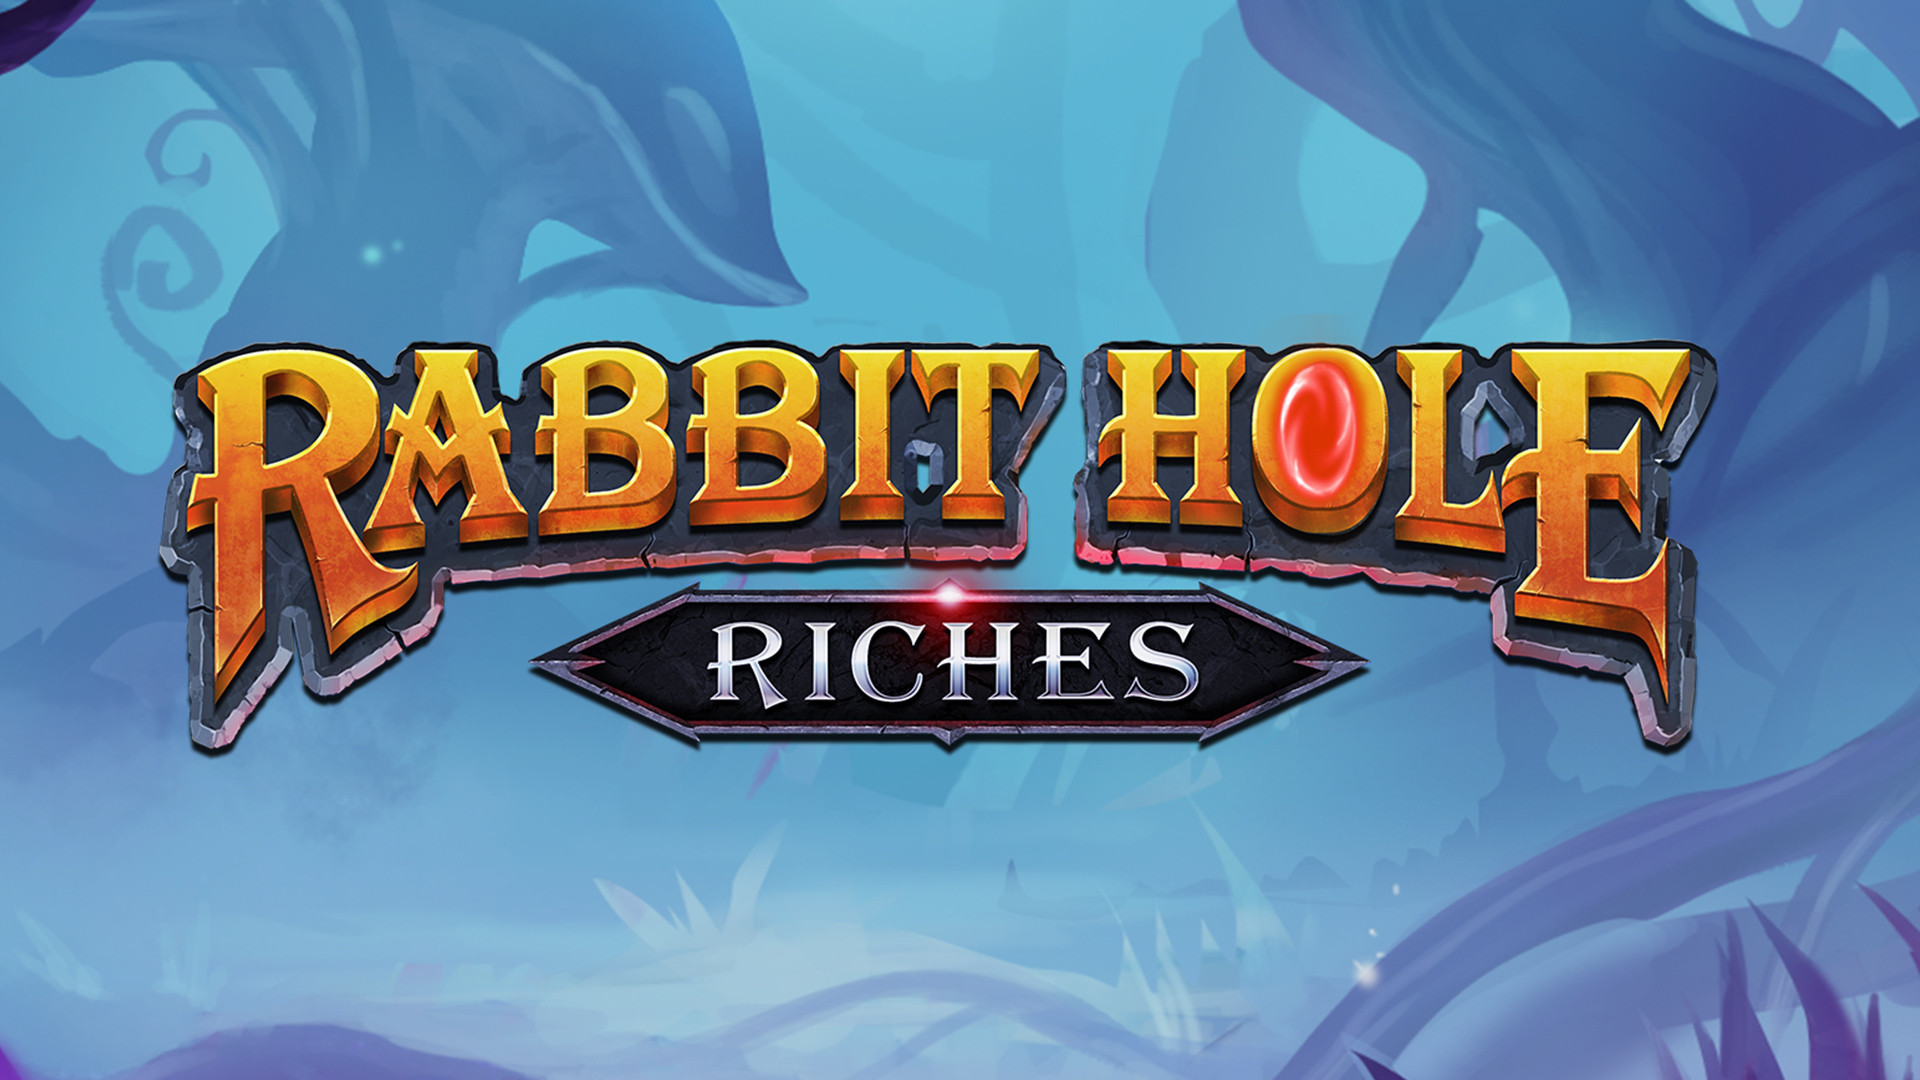 Rabbit Hole Riches